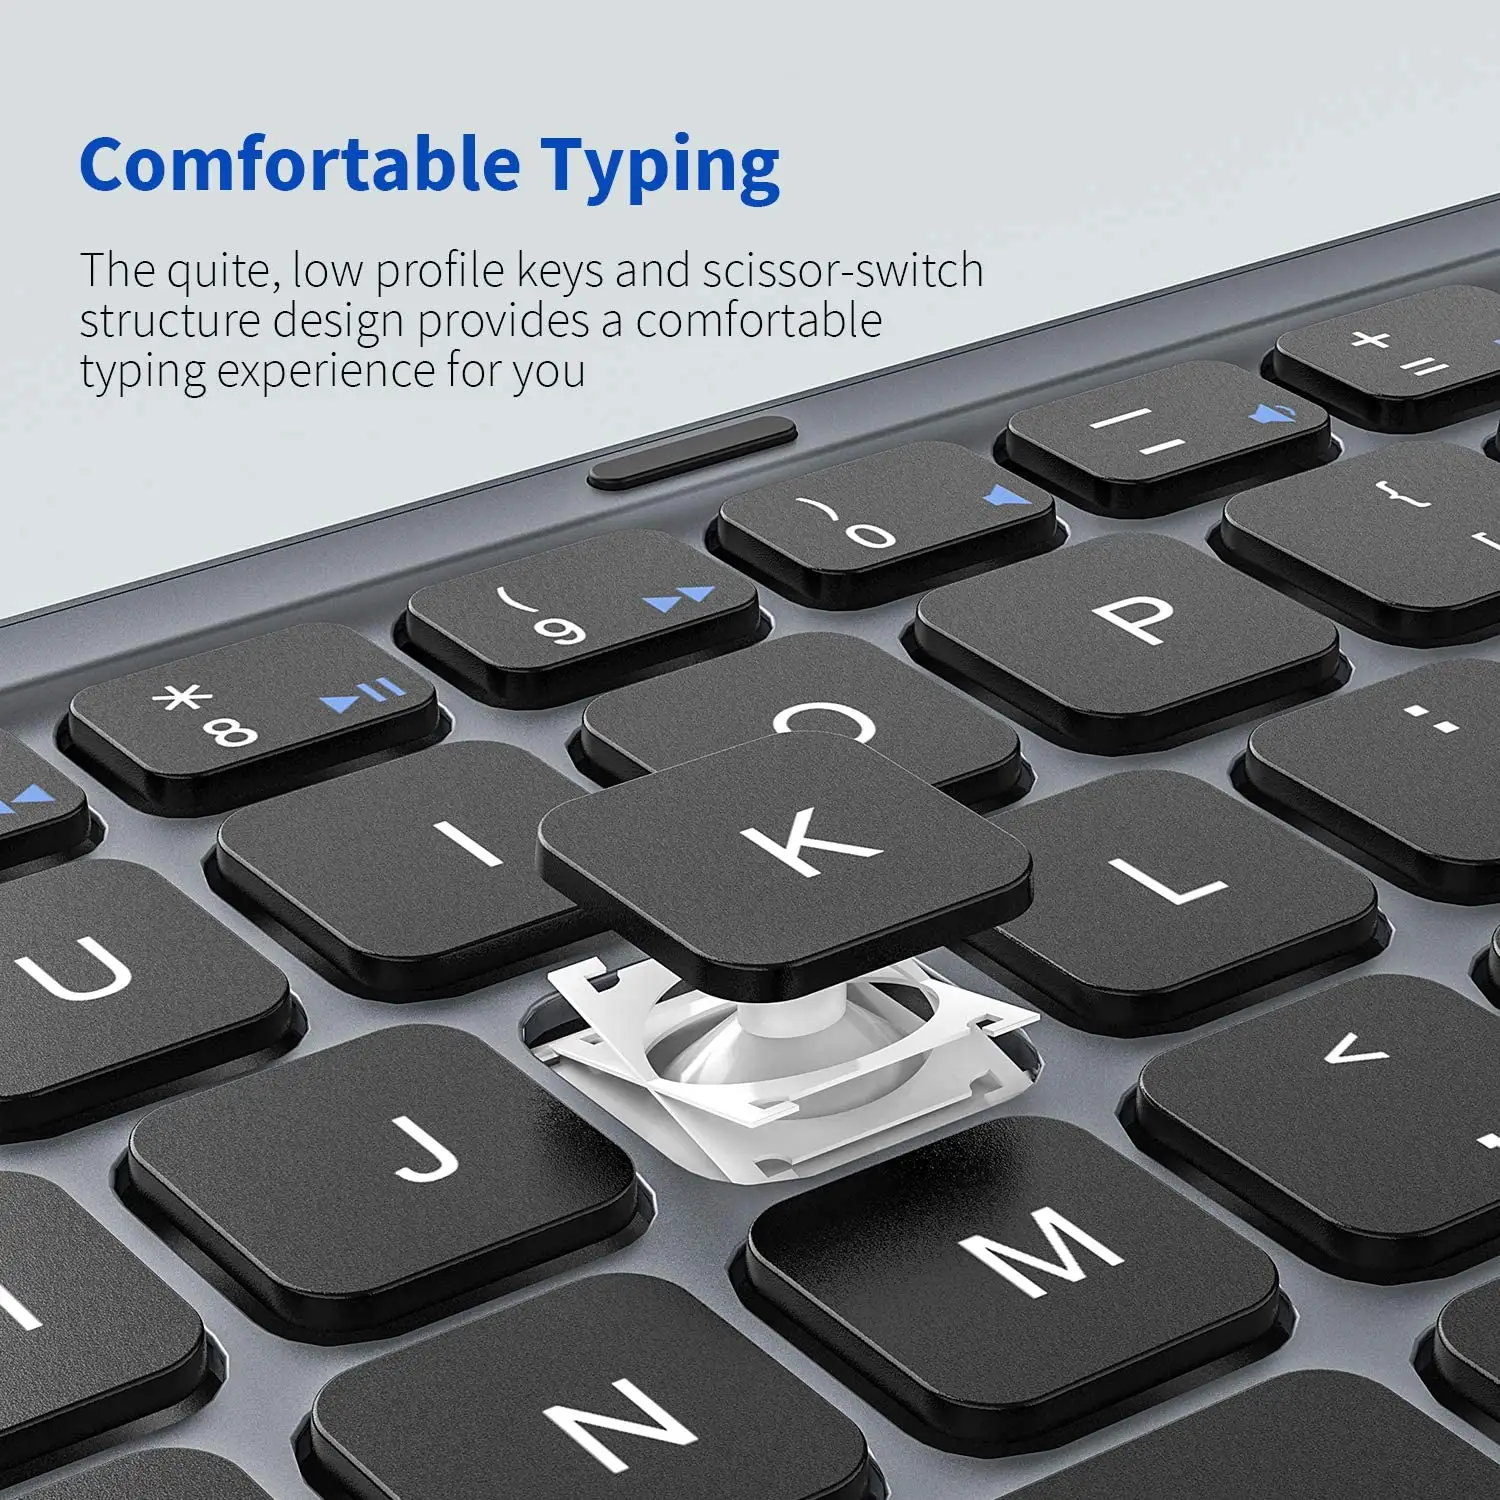 Oem b033 teclado portátil dobrável triplo, touchpad ultra fino portátil mini bt sem fio, com almofada de toque